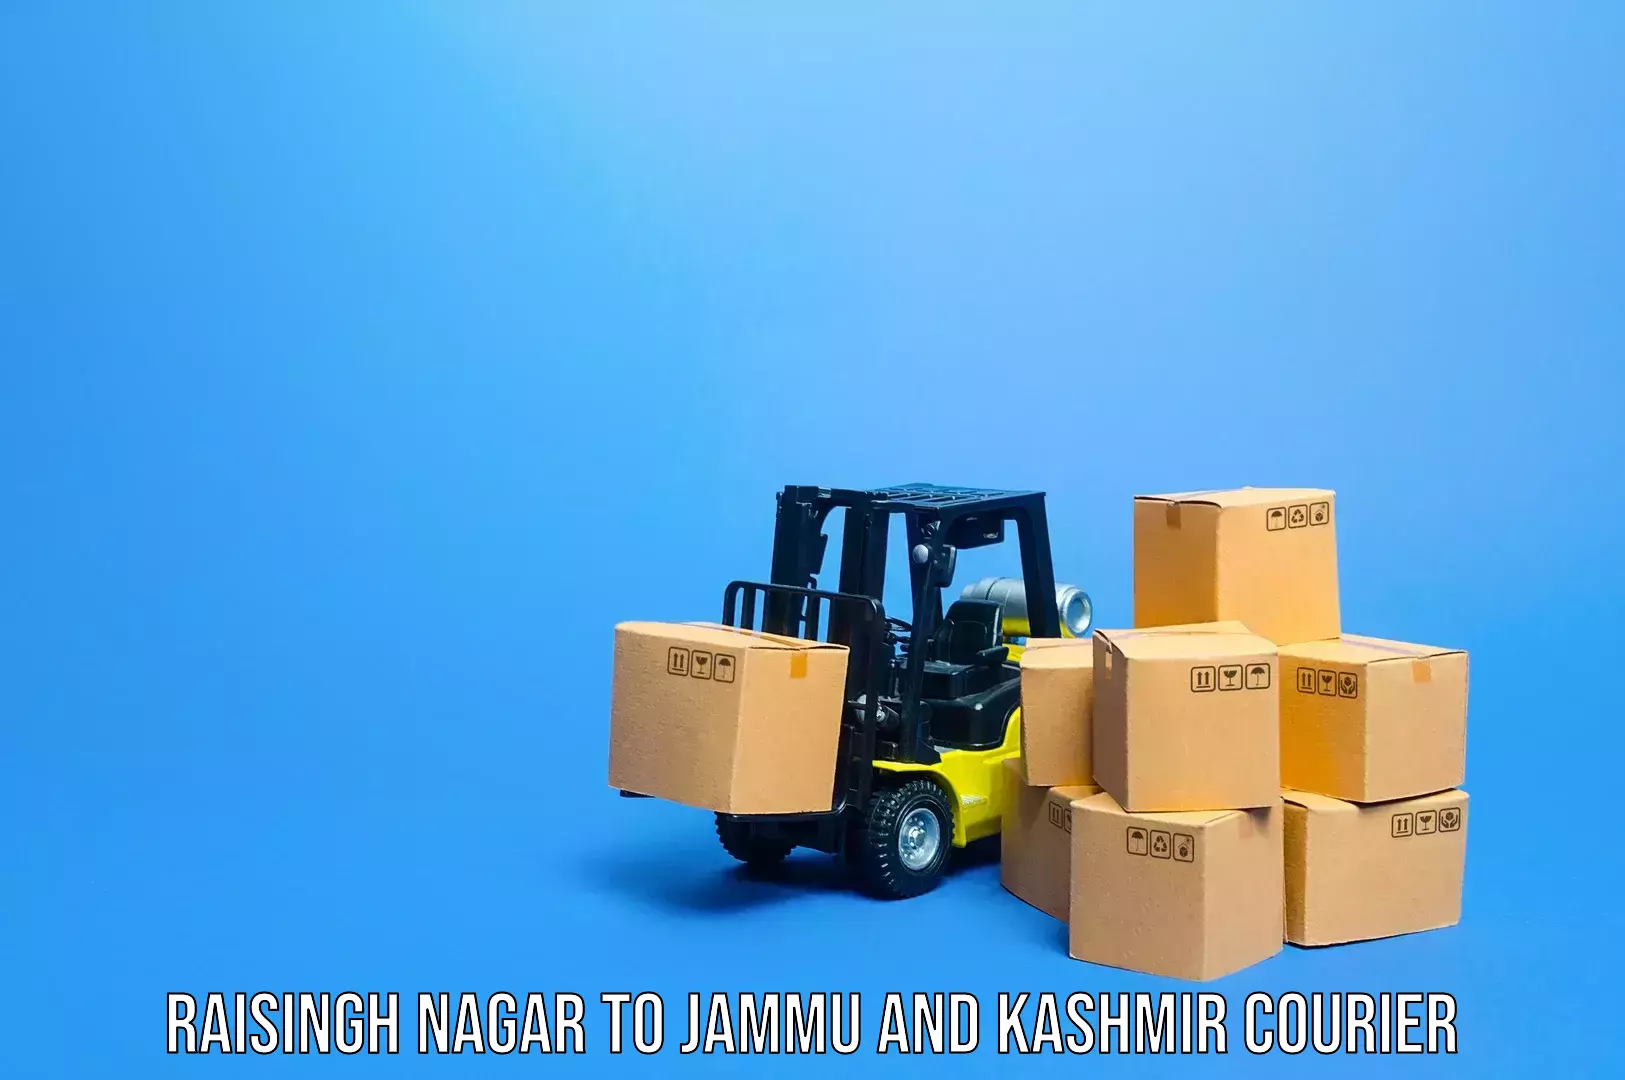 Luggage shipment specialists Raisingh Nagar to Leh